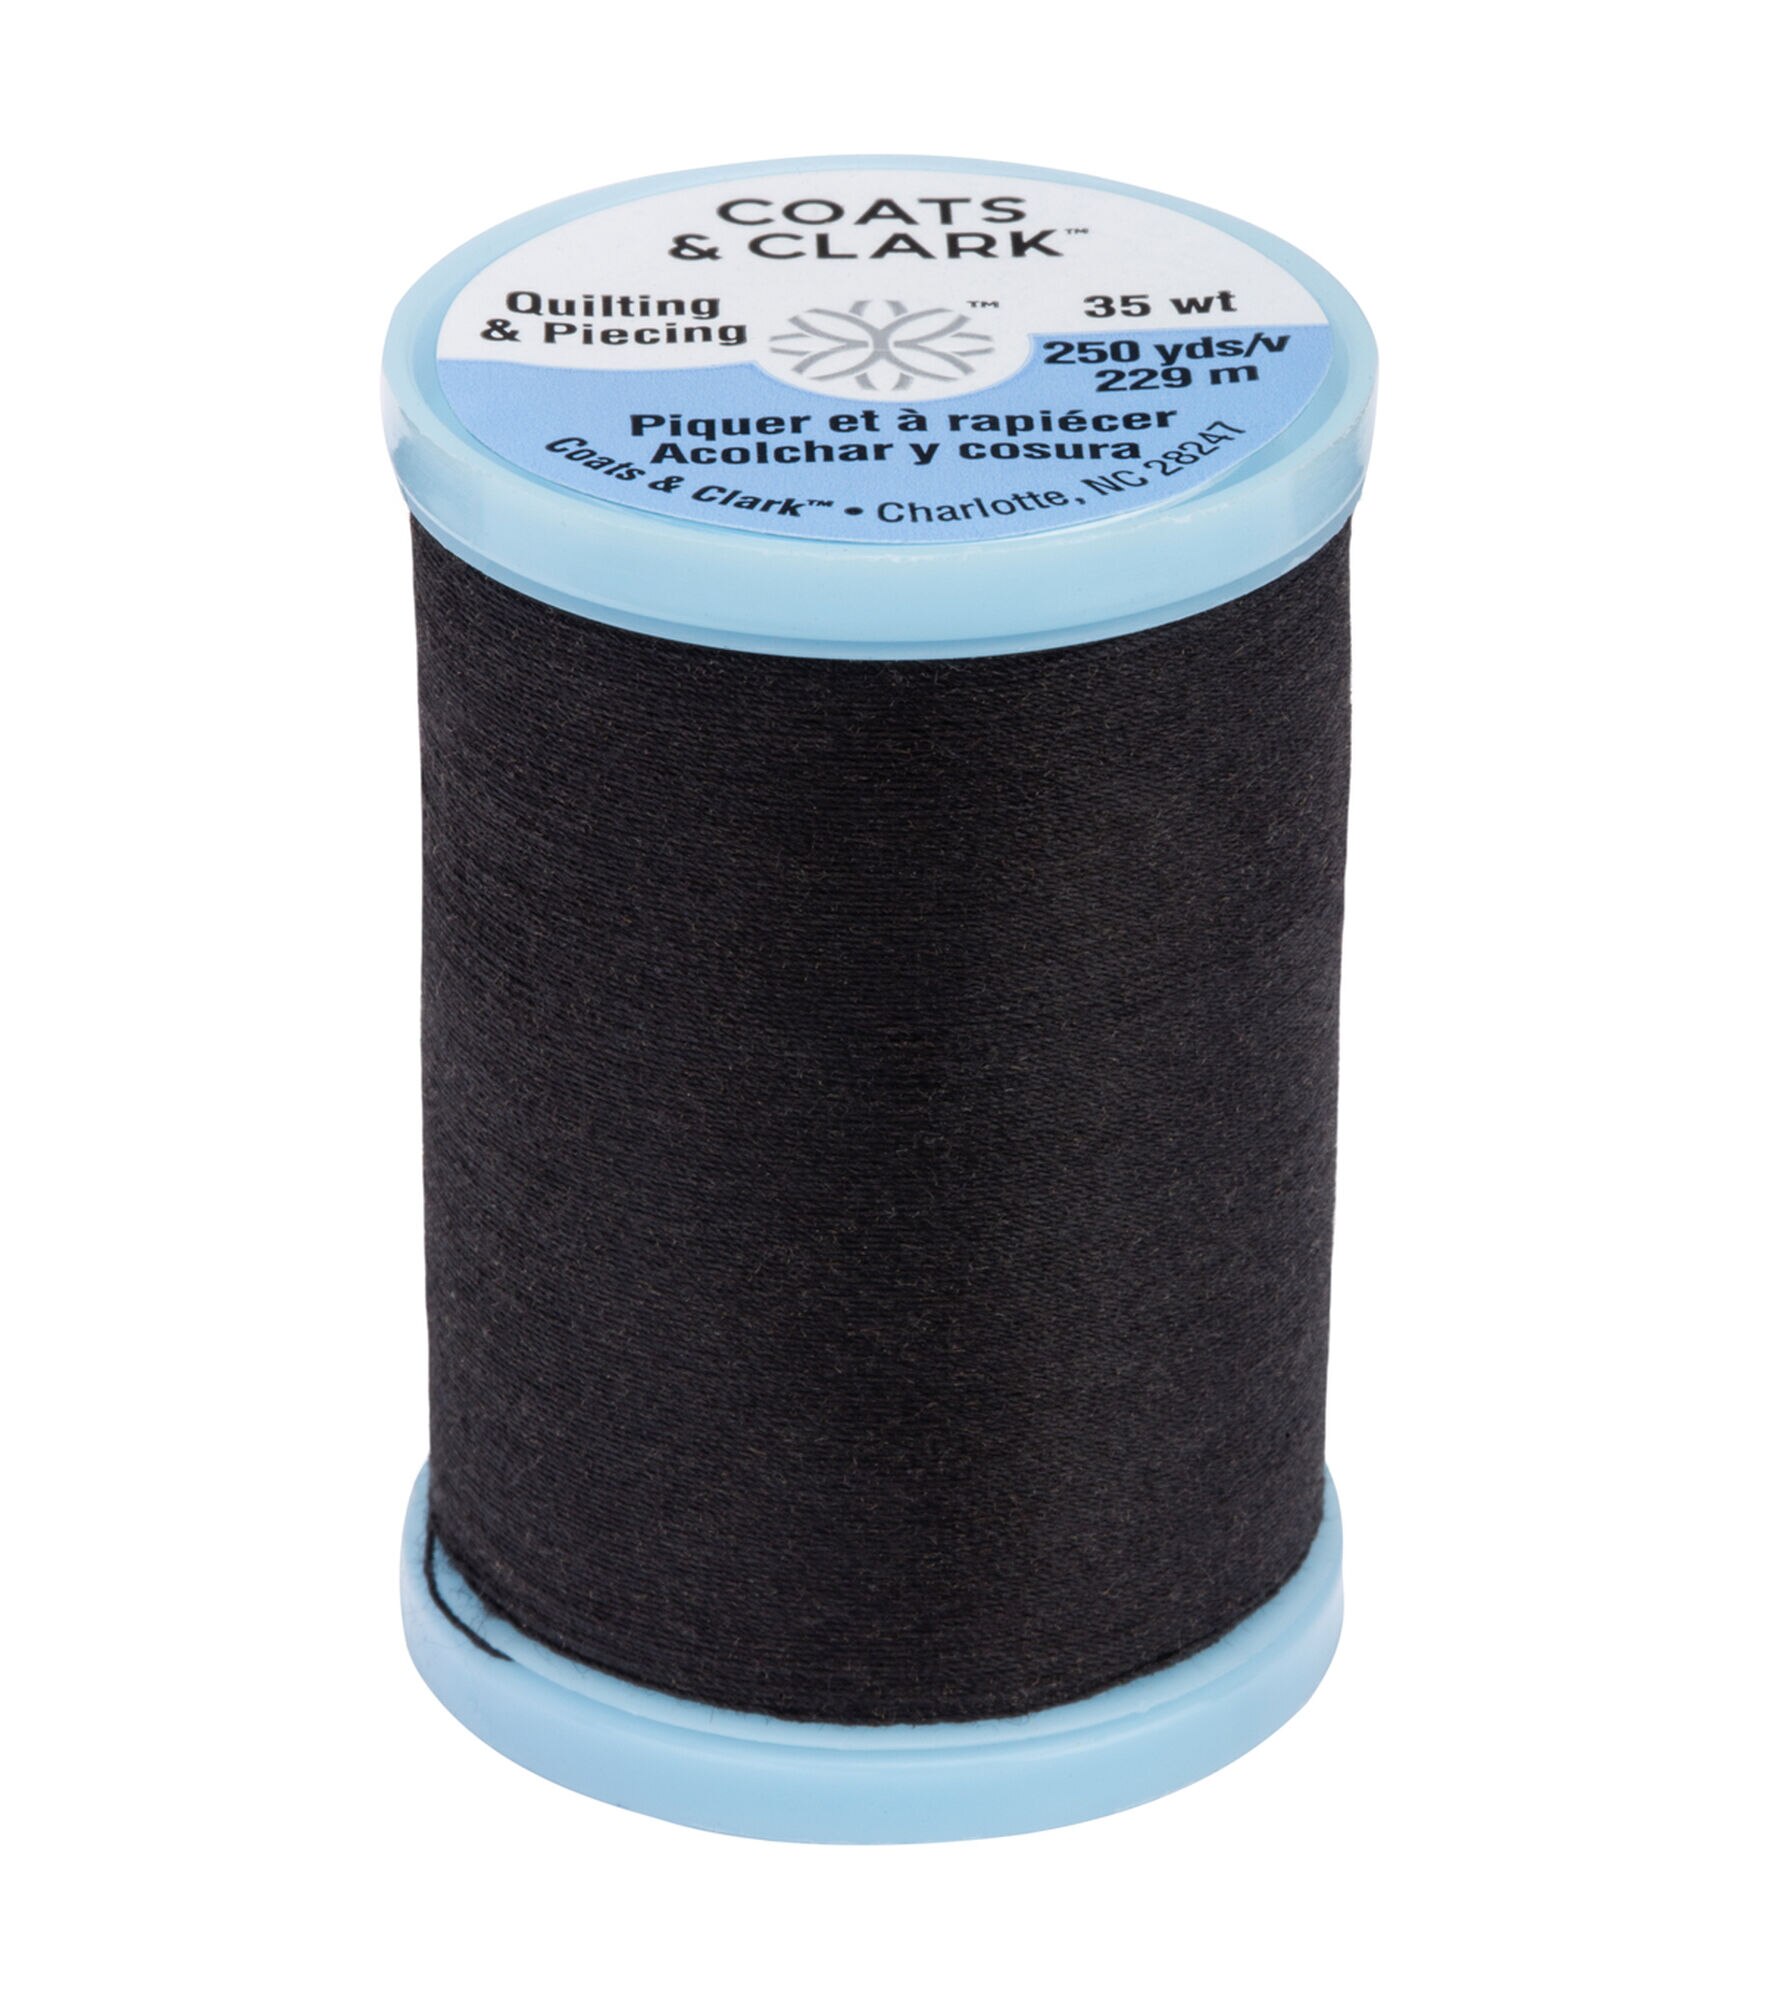 Coats & Clark 250yd 35wt Covered Quilting & Piecing Cotton Thread, 900 Black, hi-res